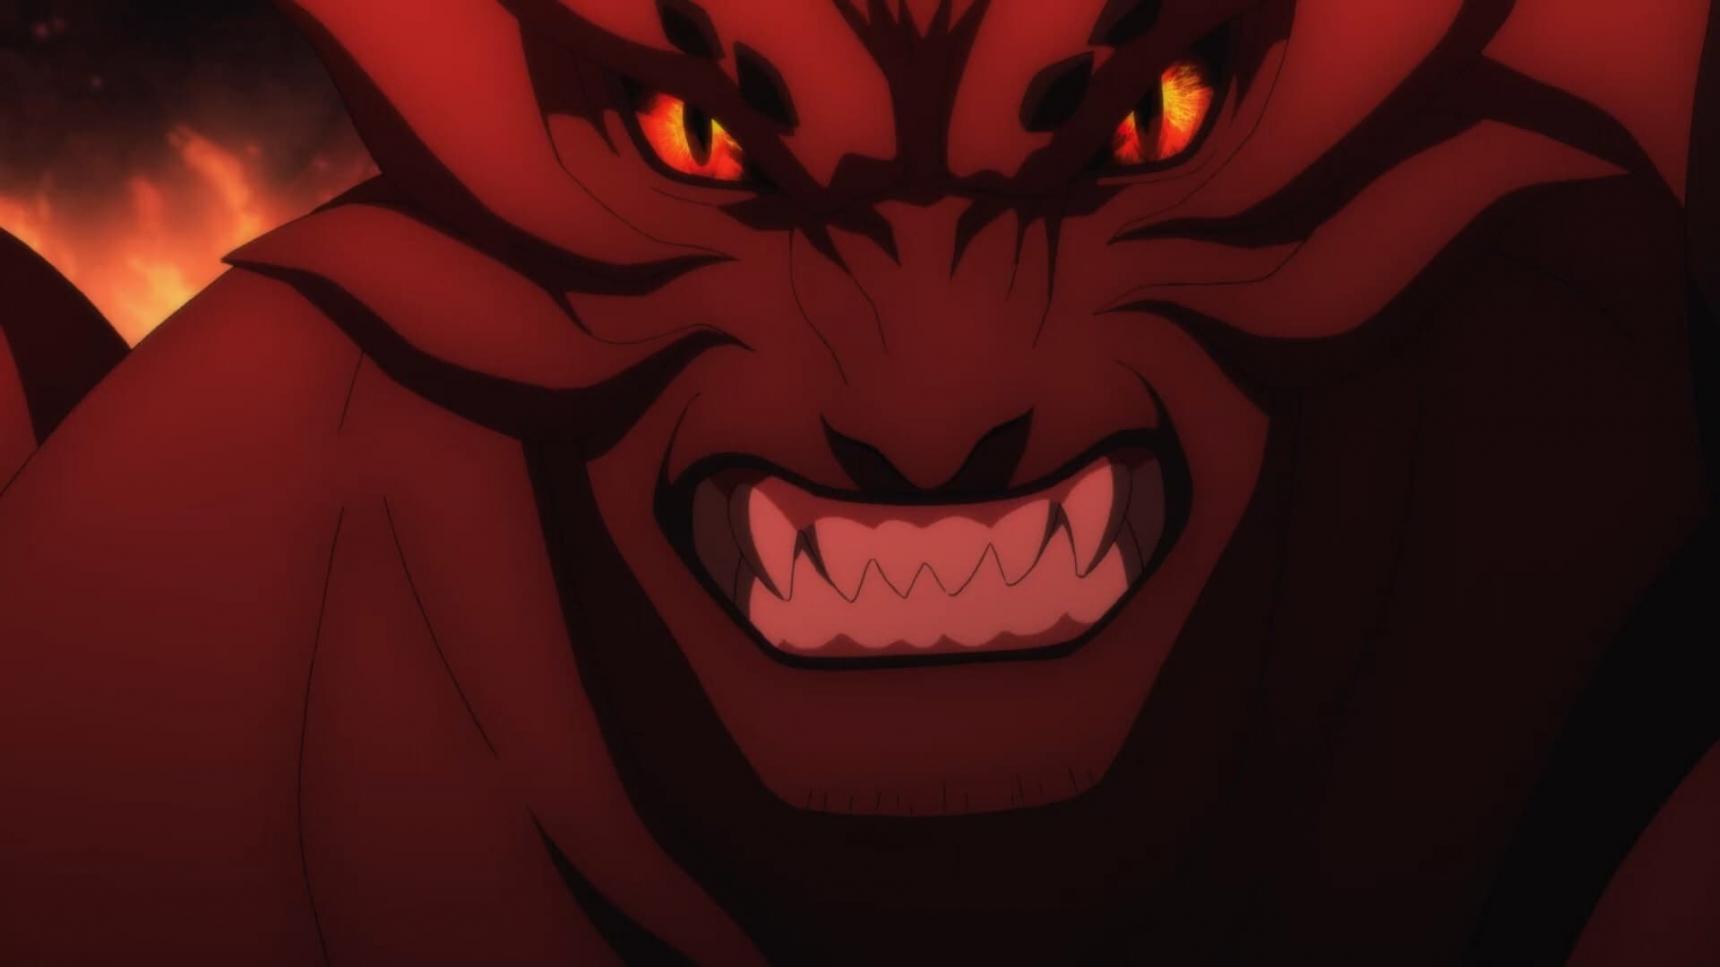 Poster del episodio 8 de DOTA: Dragon’s Blood online